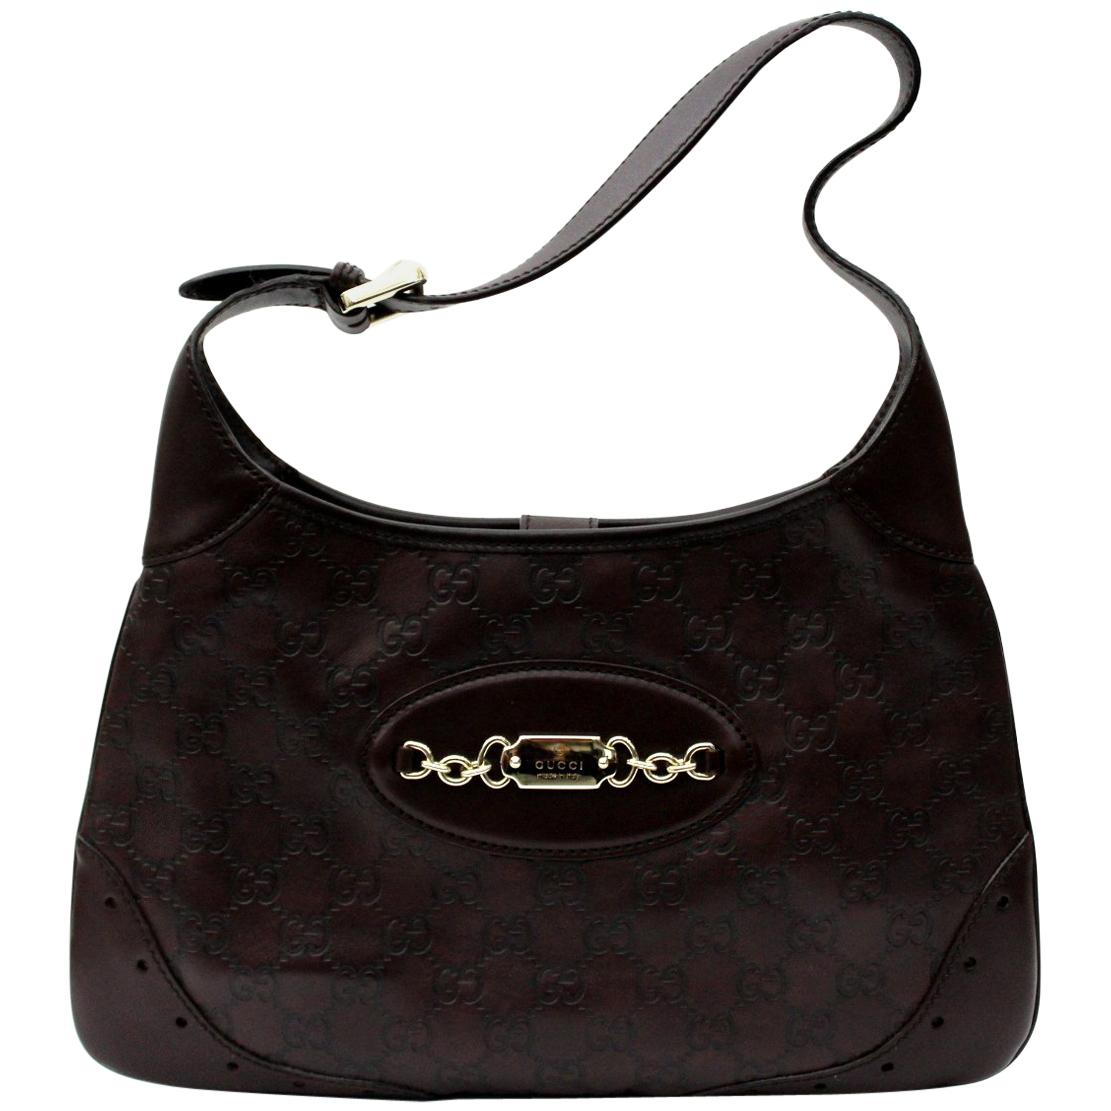 Gucci Mahogany Leather Shoulder Bag